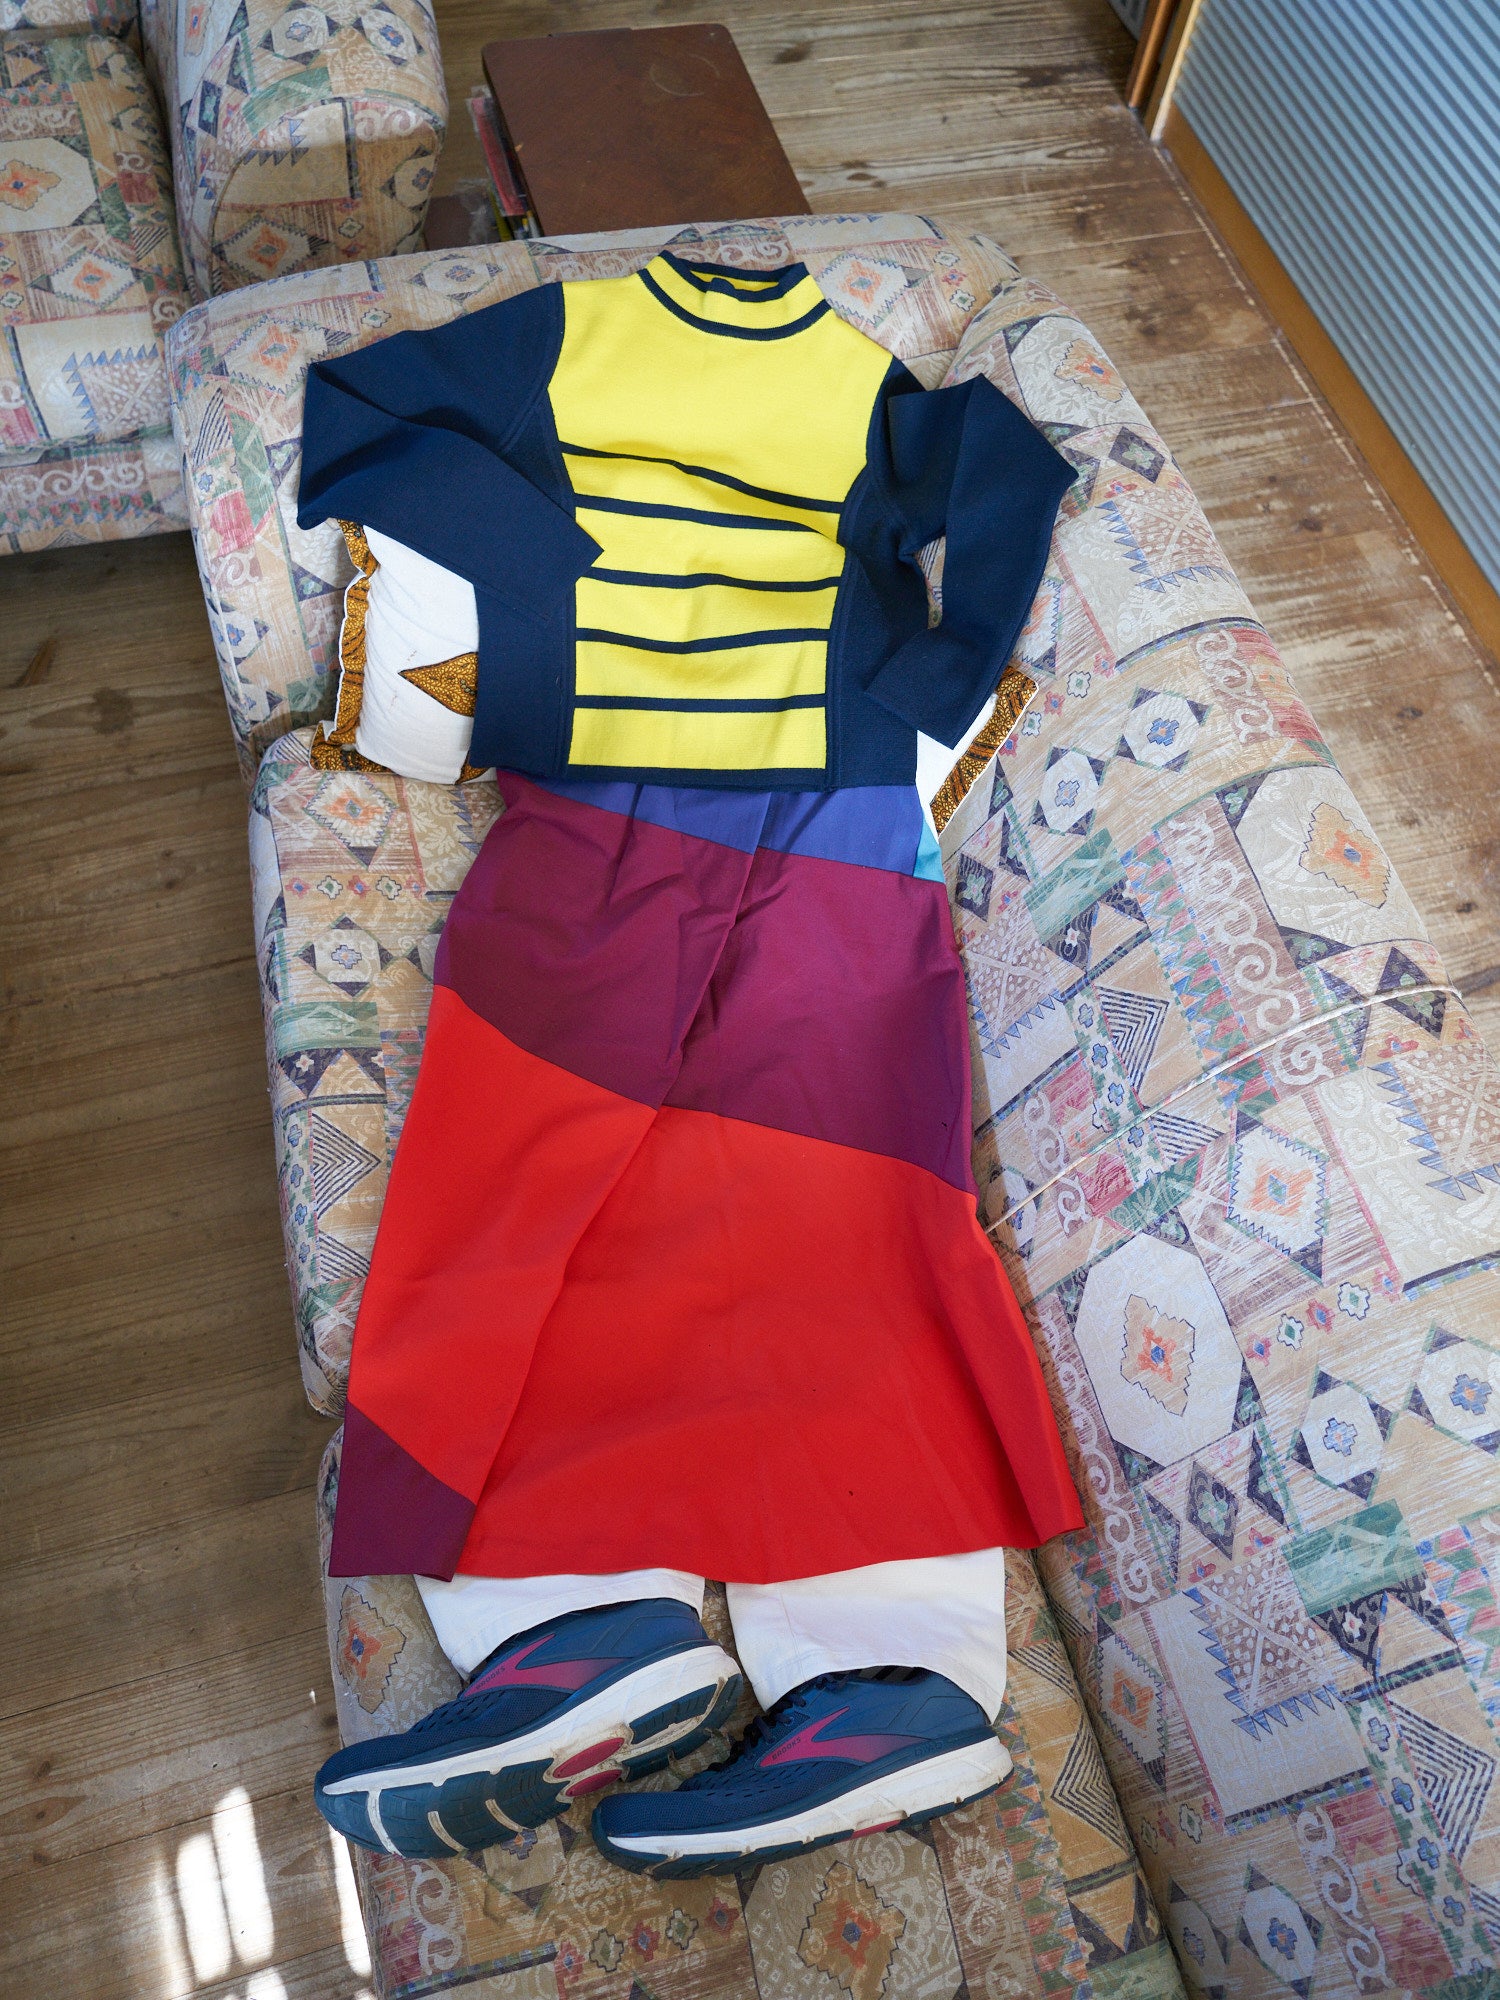 Junko Shimada Part 2 yellow and navy wool stripe mock neck sweater - M S